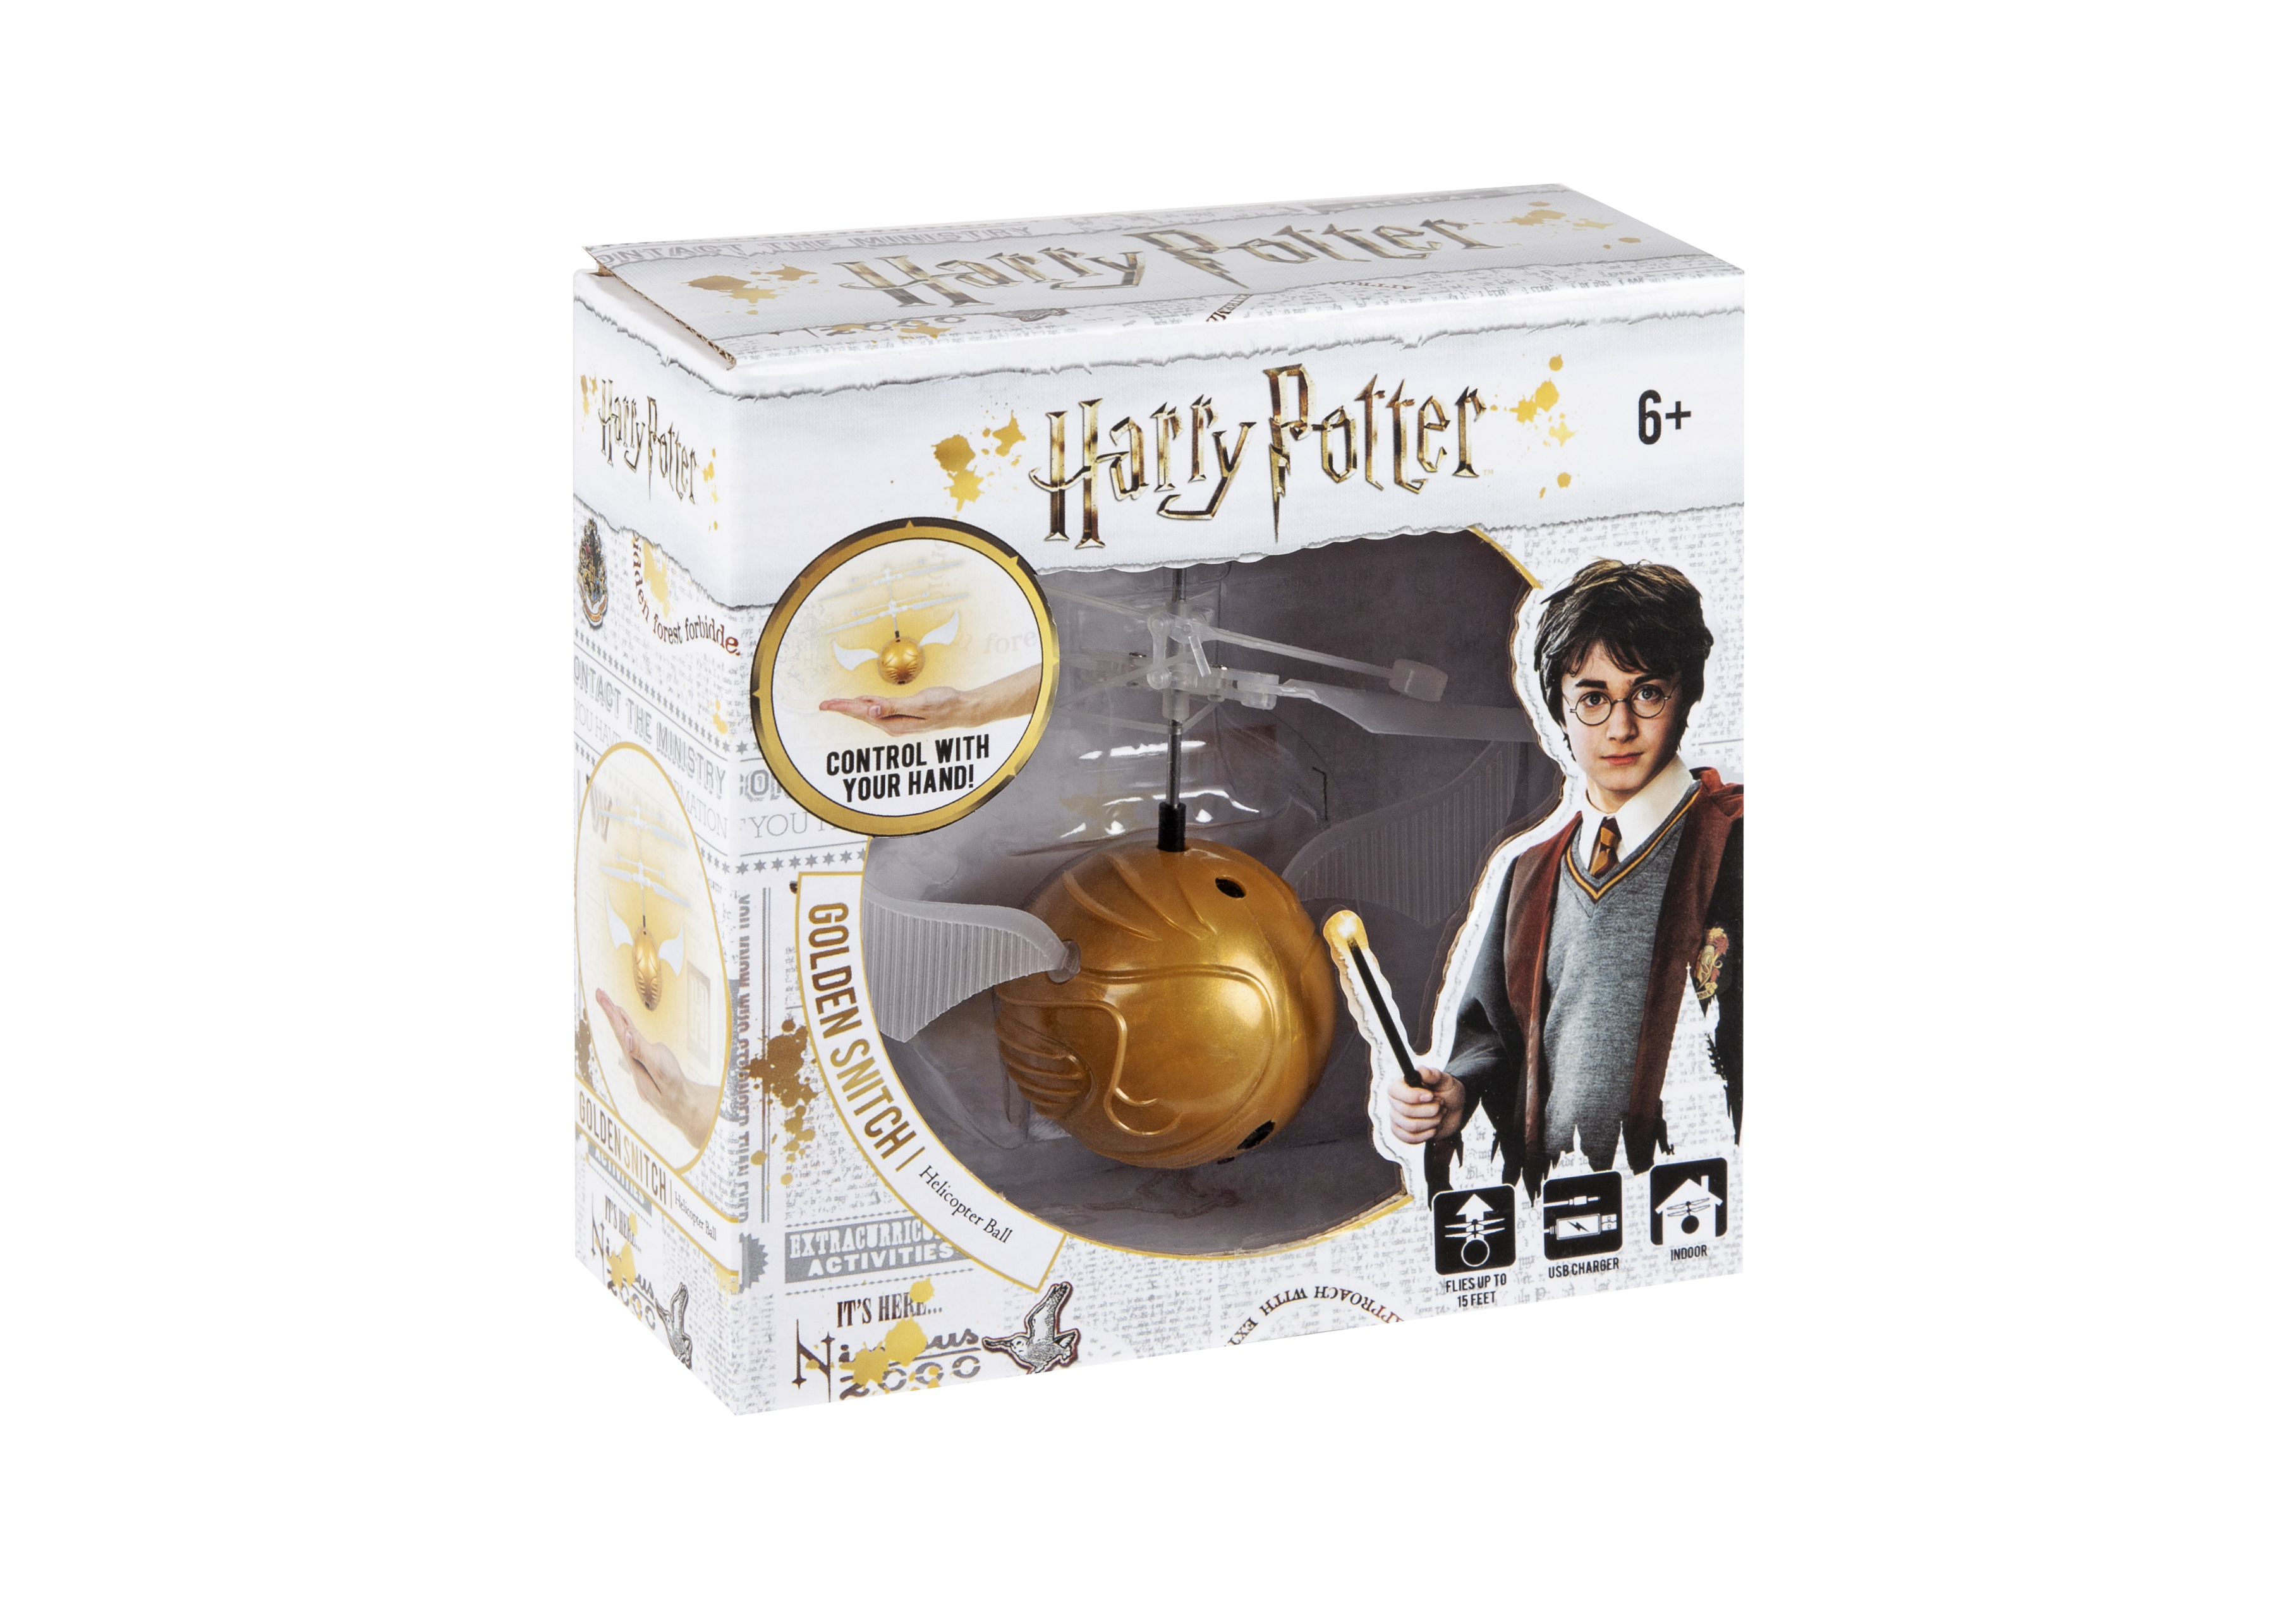 Harry Potter Golden Snitch IR UFO Heli Ball - image 3 of 3